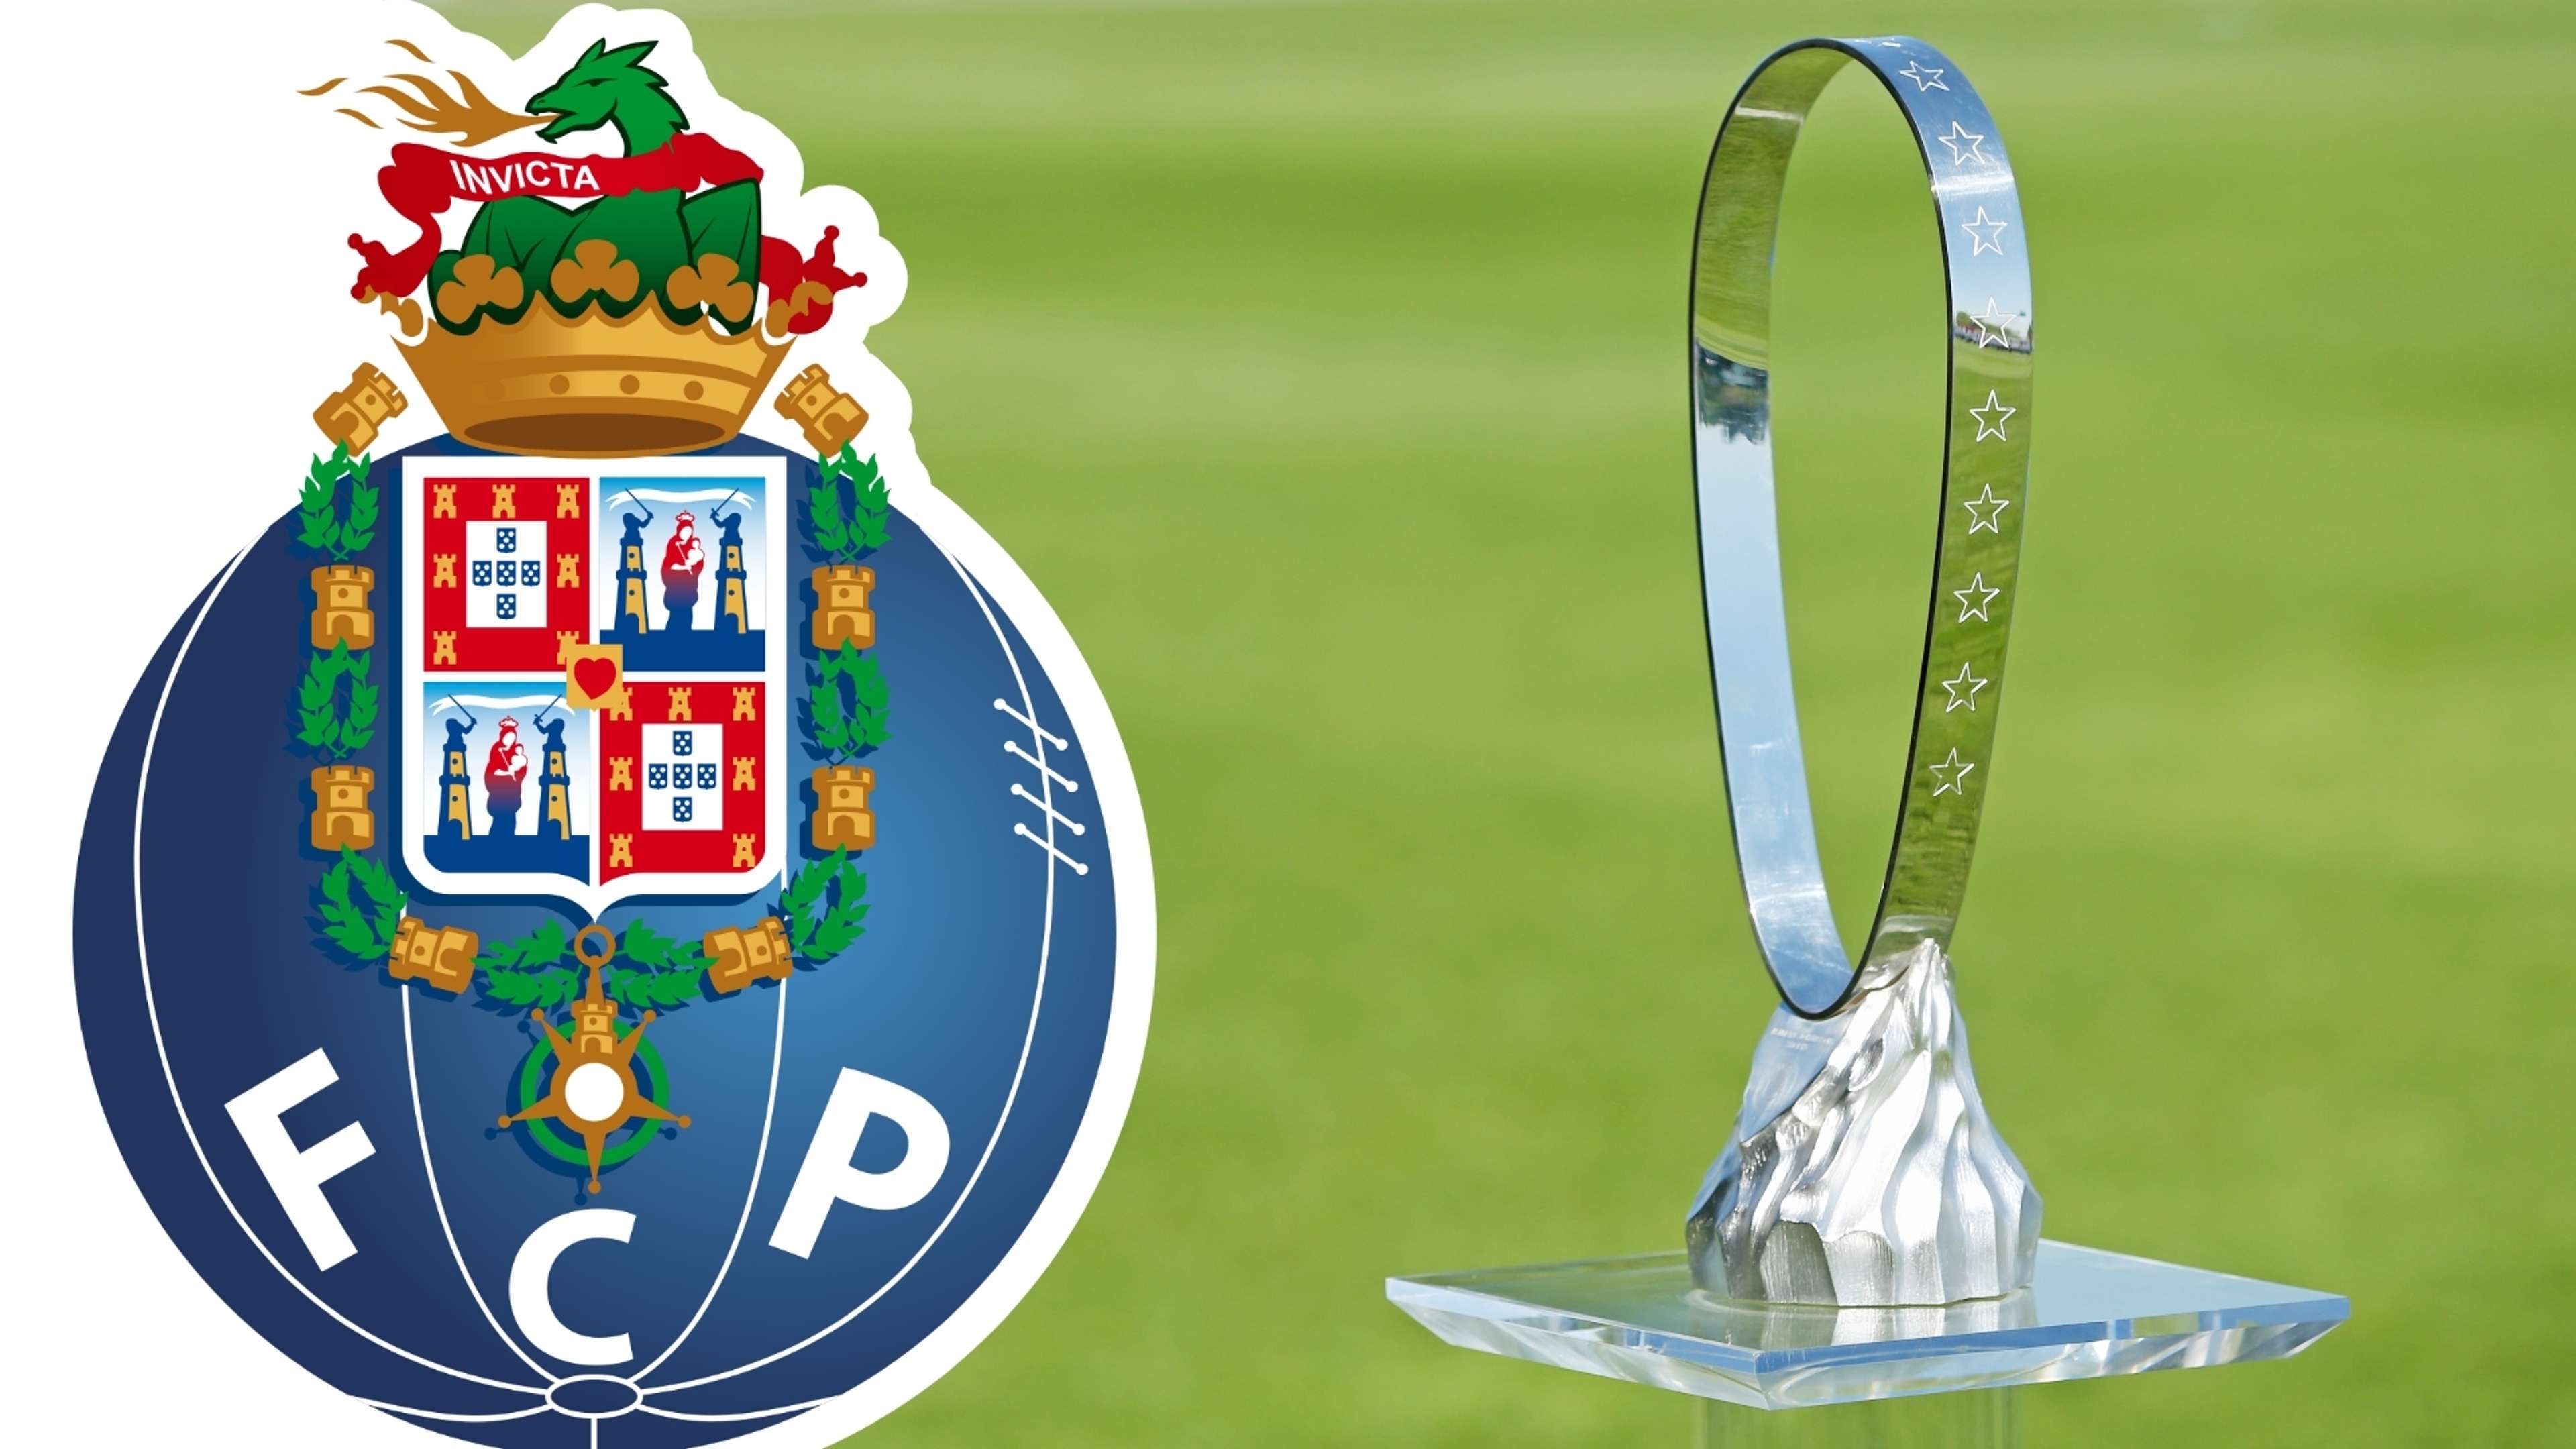 UEFA Youth League trophy, Porto logo